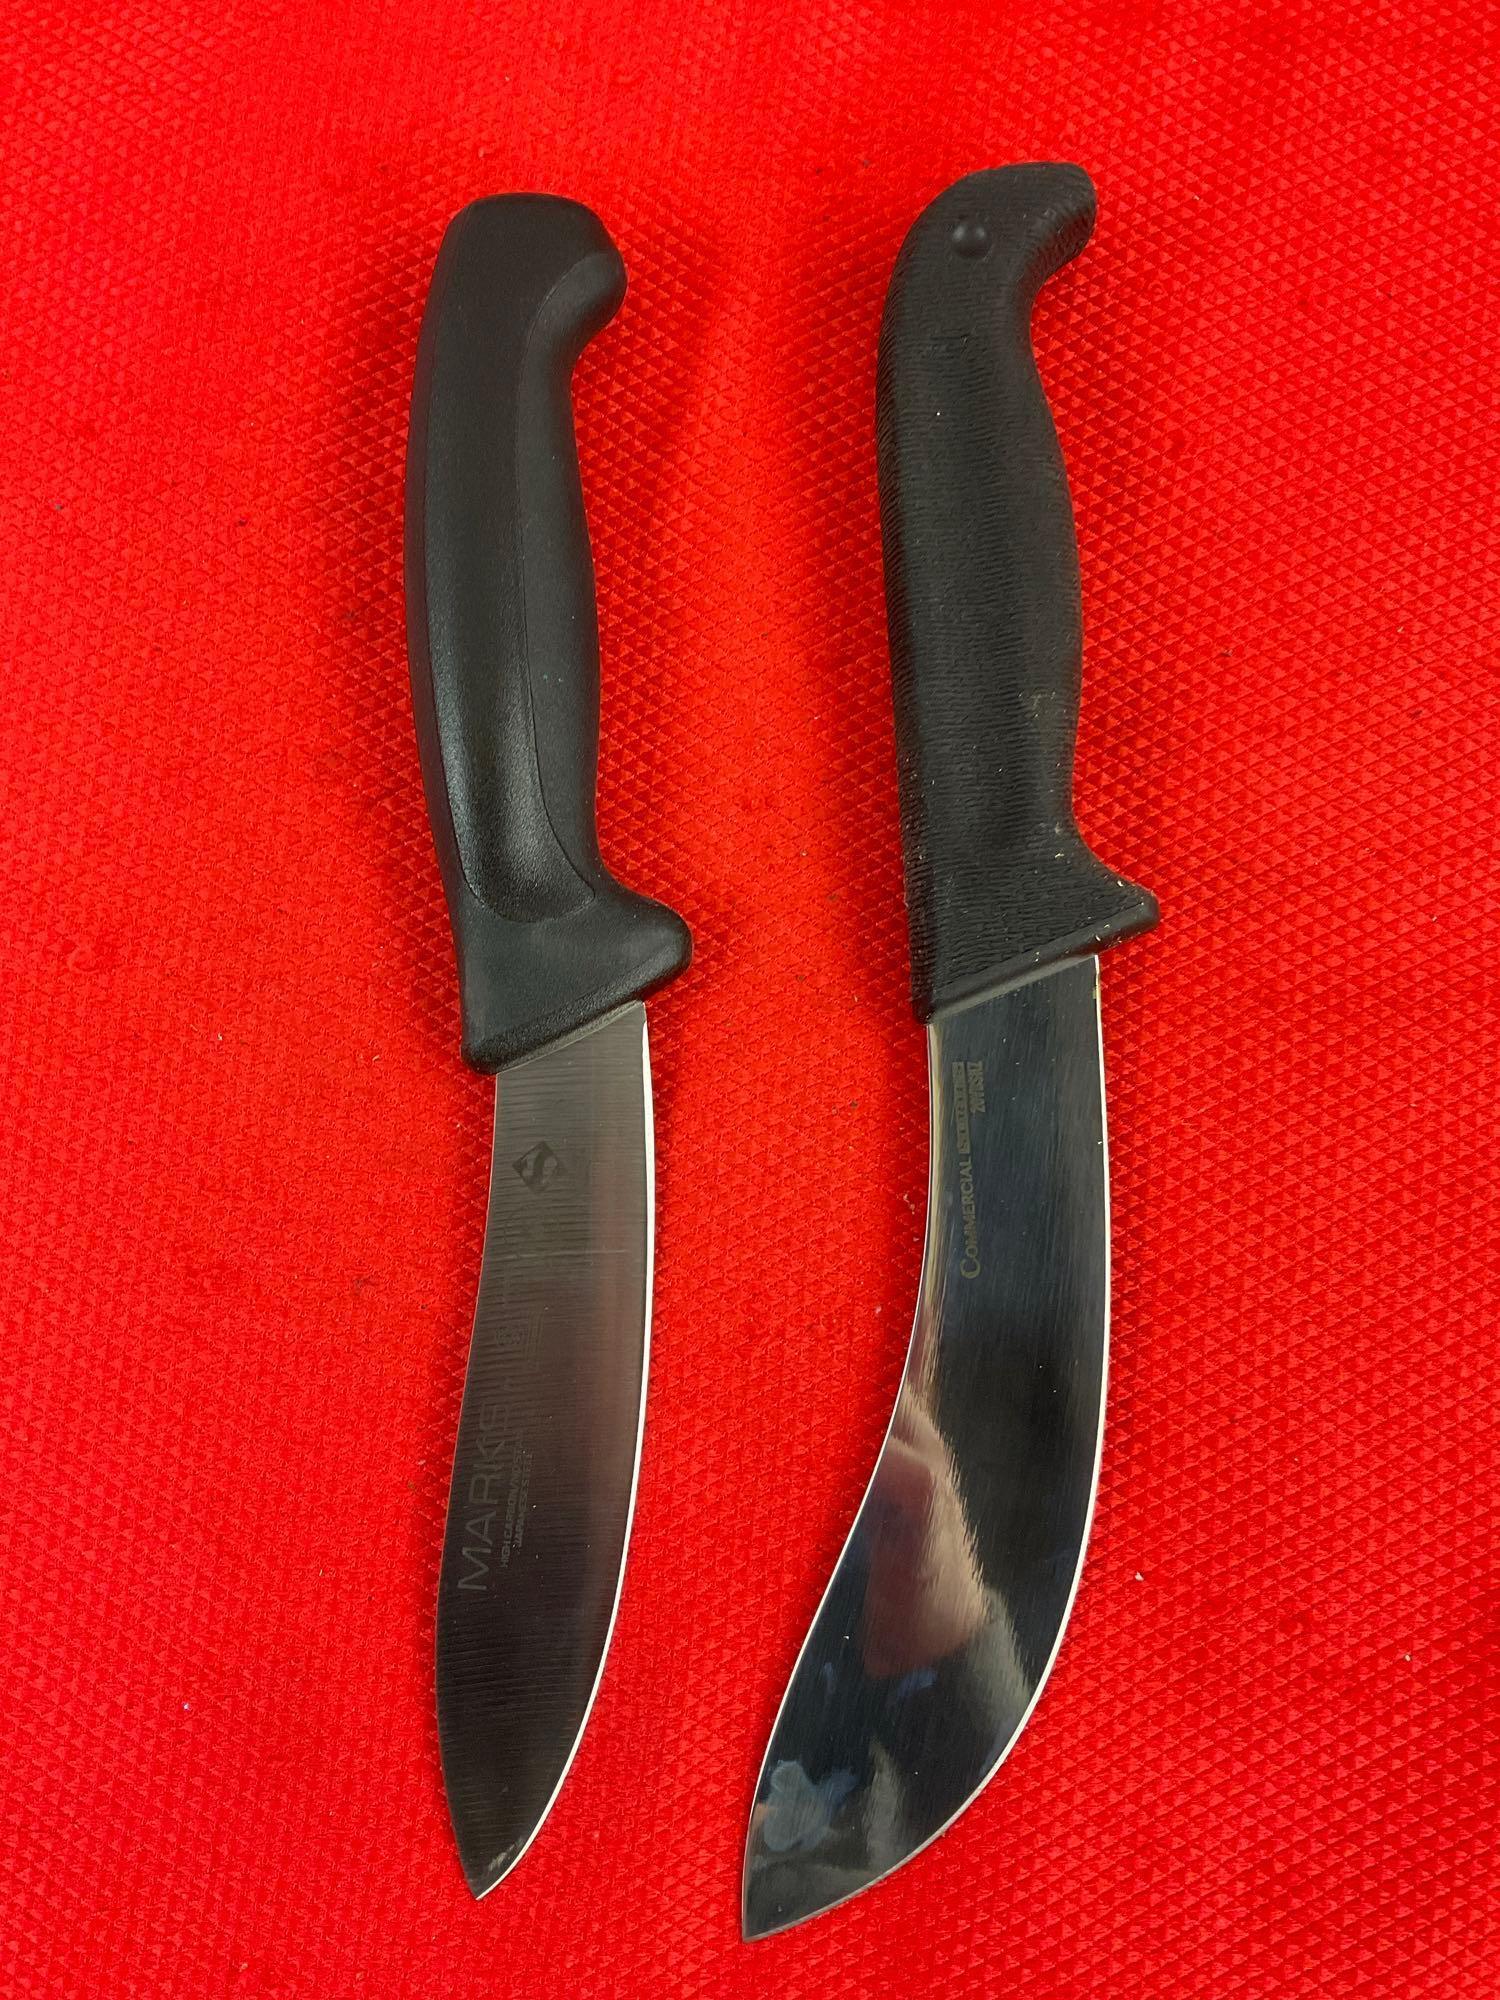 2 pcs Modern Steel Fixed Blade Knives. 1x Cold Steel 20VBSKZ, 1x Mundial MA49-5. See pics.